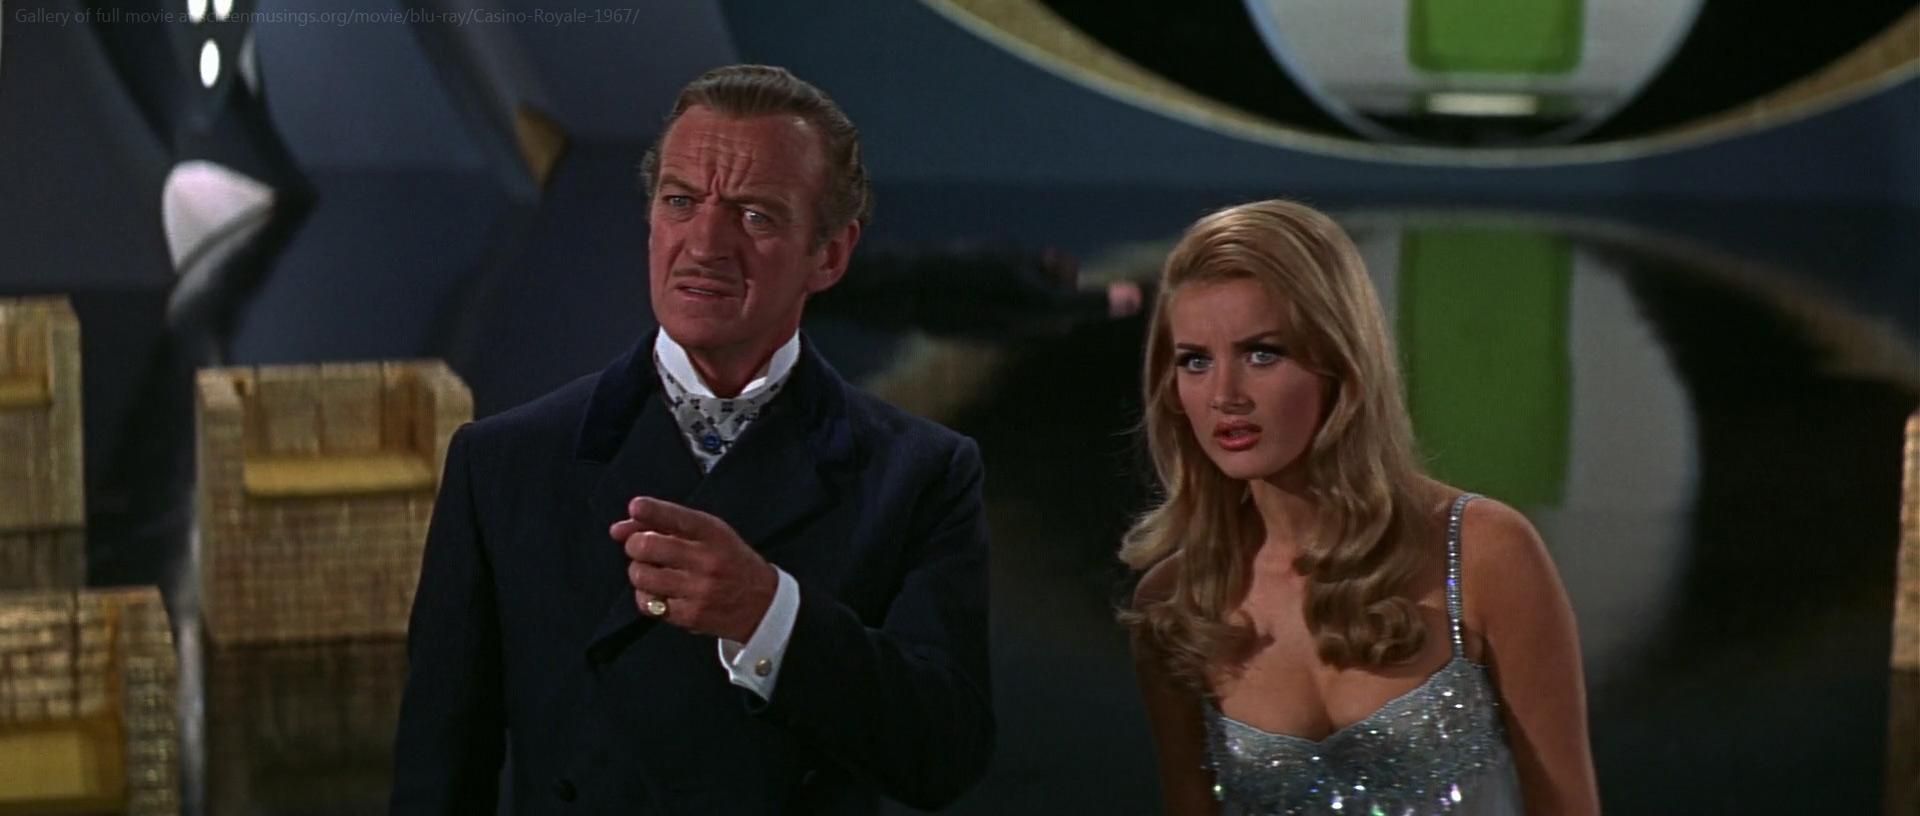 Barbara Bouchet and David Niven in "Casino Royale" (1966)